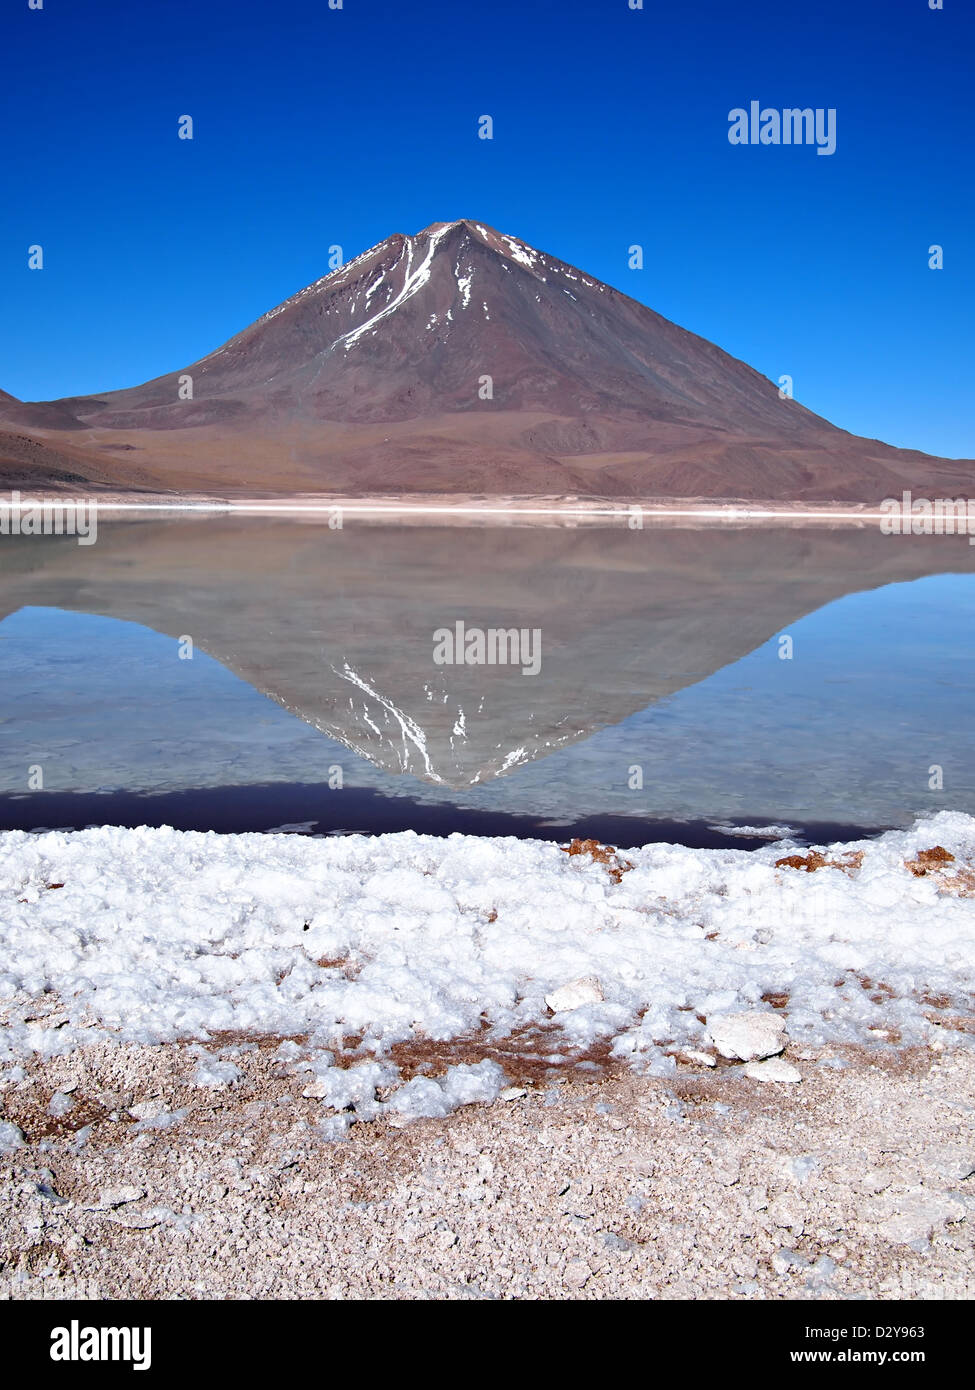 Reflection of Licancabur volcano in Laguna Verde (green lagoon) in the desert near Uyuni in Bolivia. Stock Photo